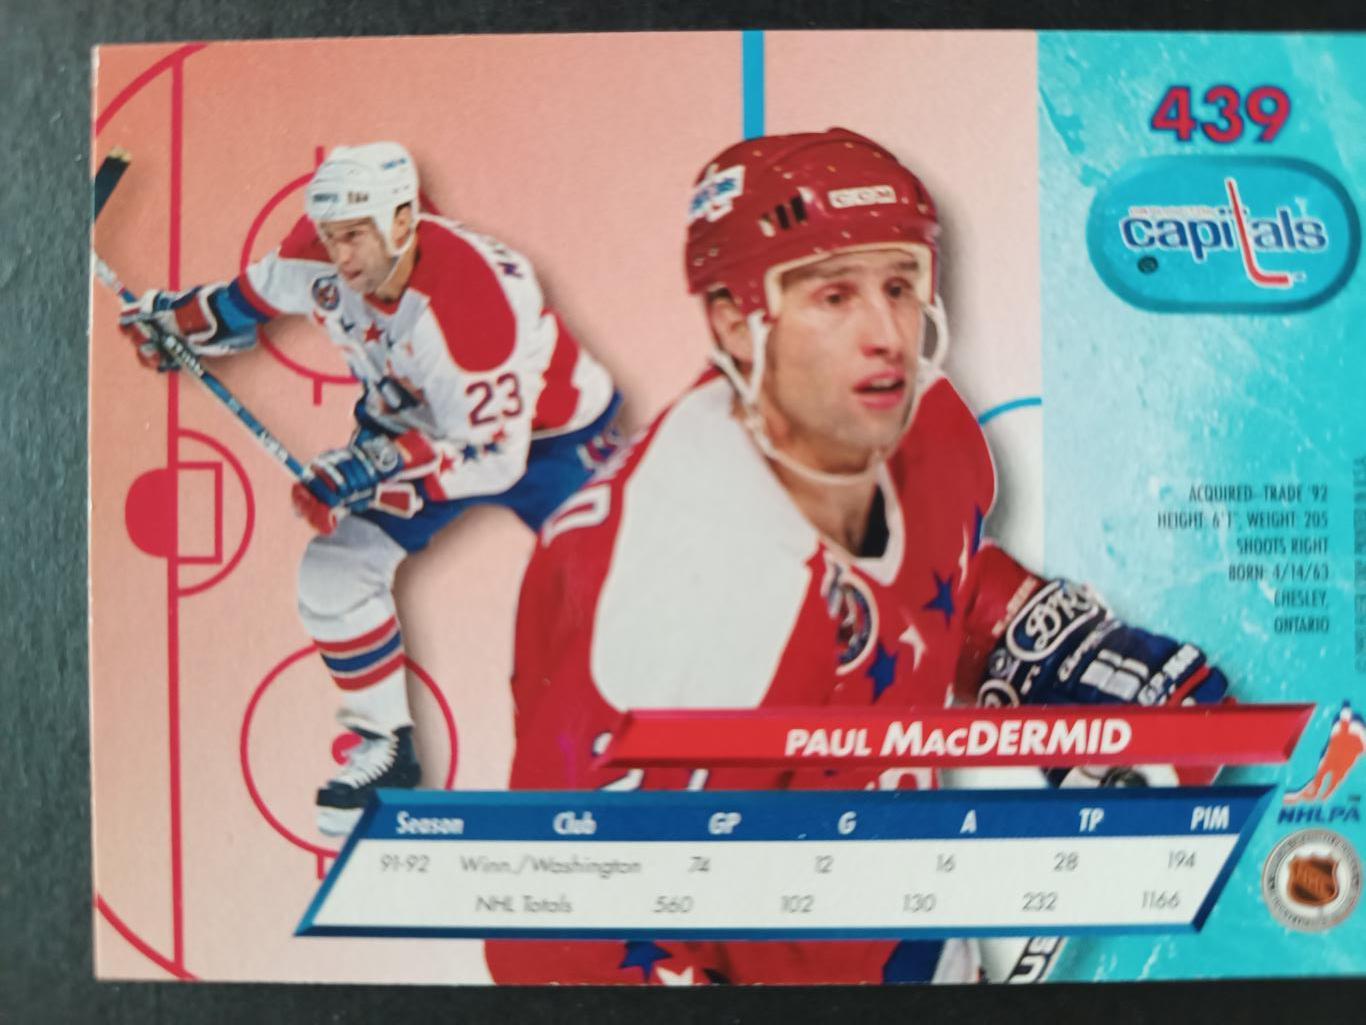 ХОККЕЙ КАРТОЧКА НХЛ FLEER ULTRA 1992-93 NHL PAUL MACDERMID WASHINGTON #439 1